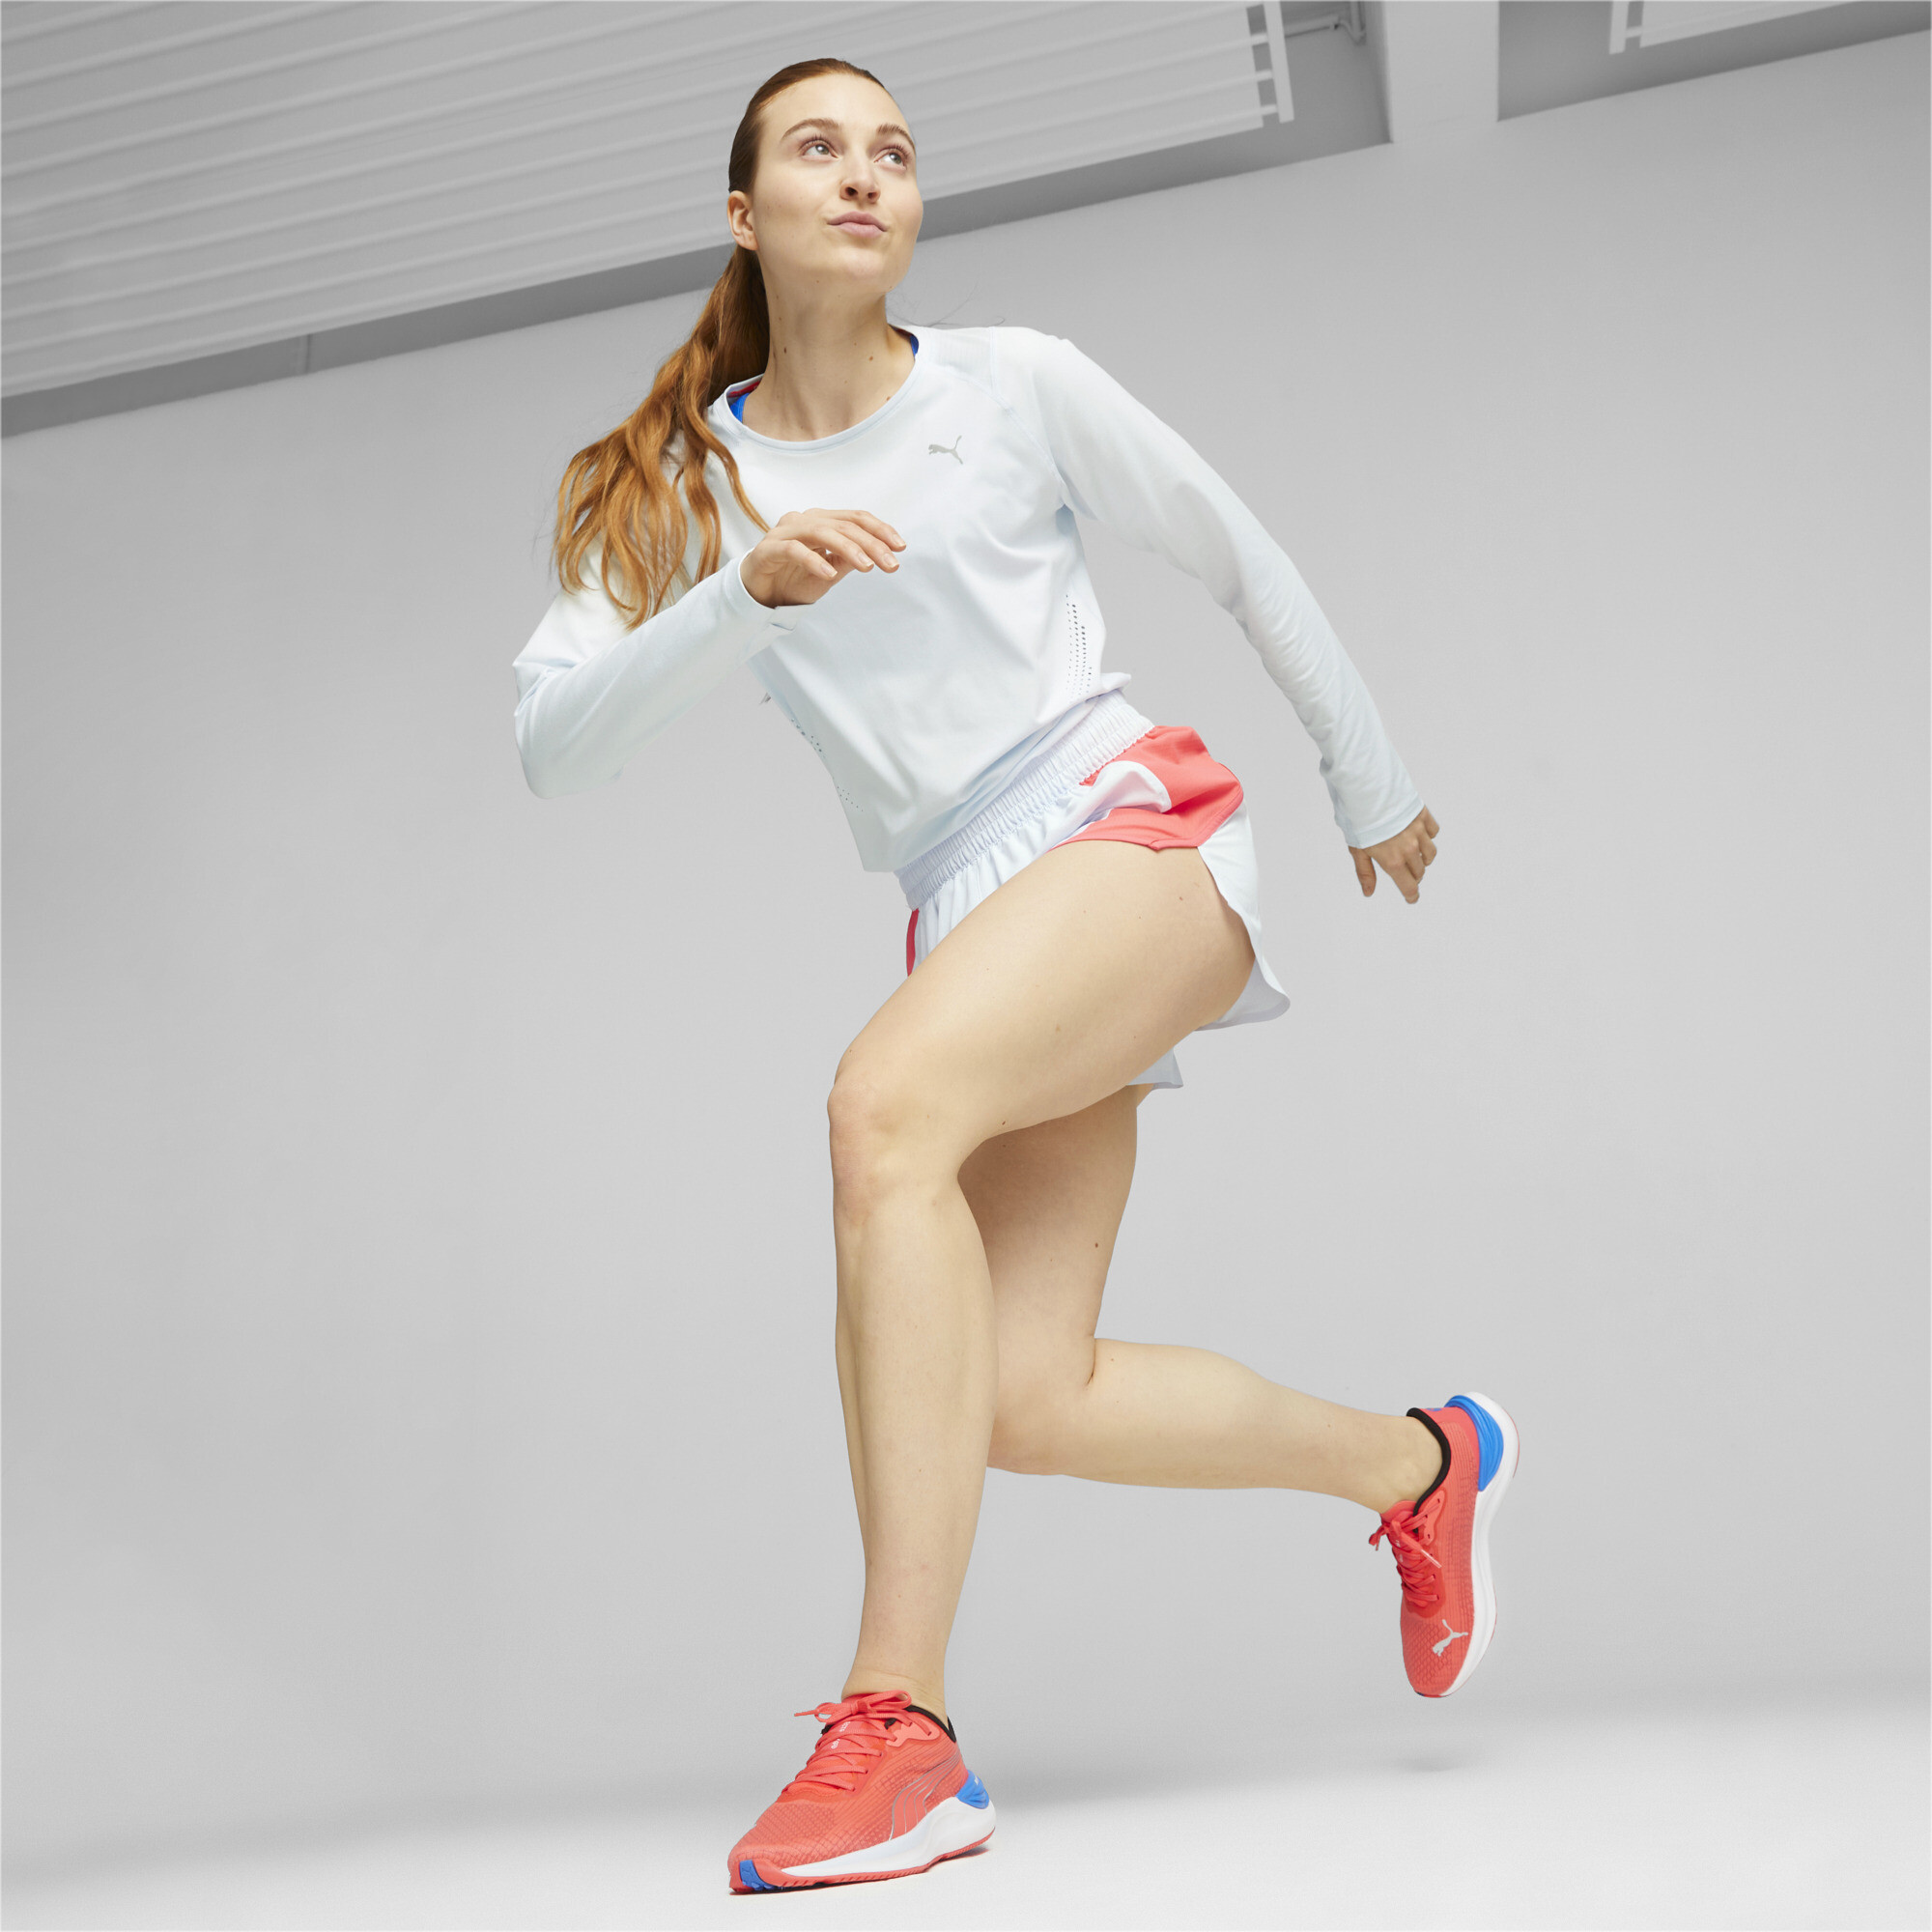 Women's PUMA Electrify NITROâ¢ 3 Running Shoes In Red, Size EU 38.5